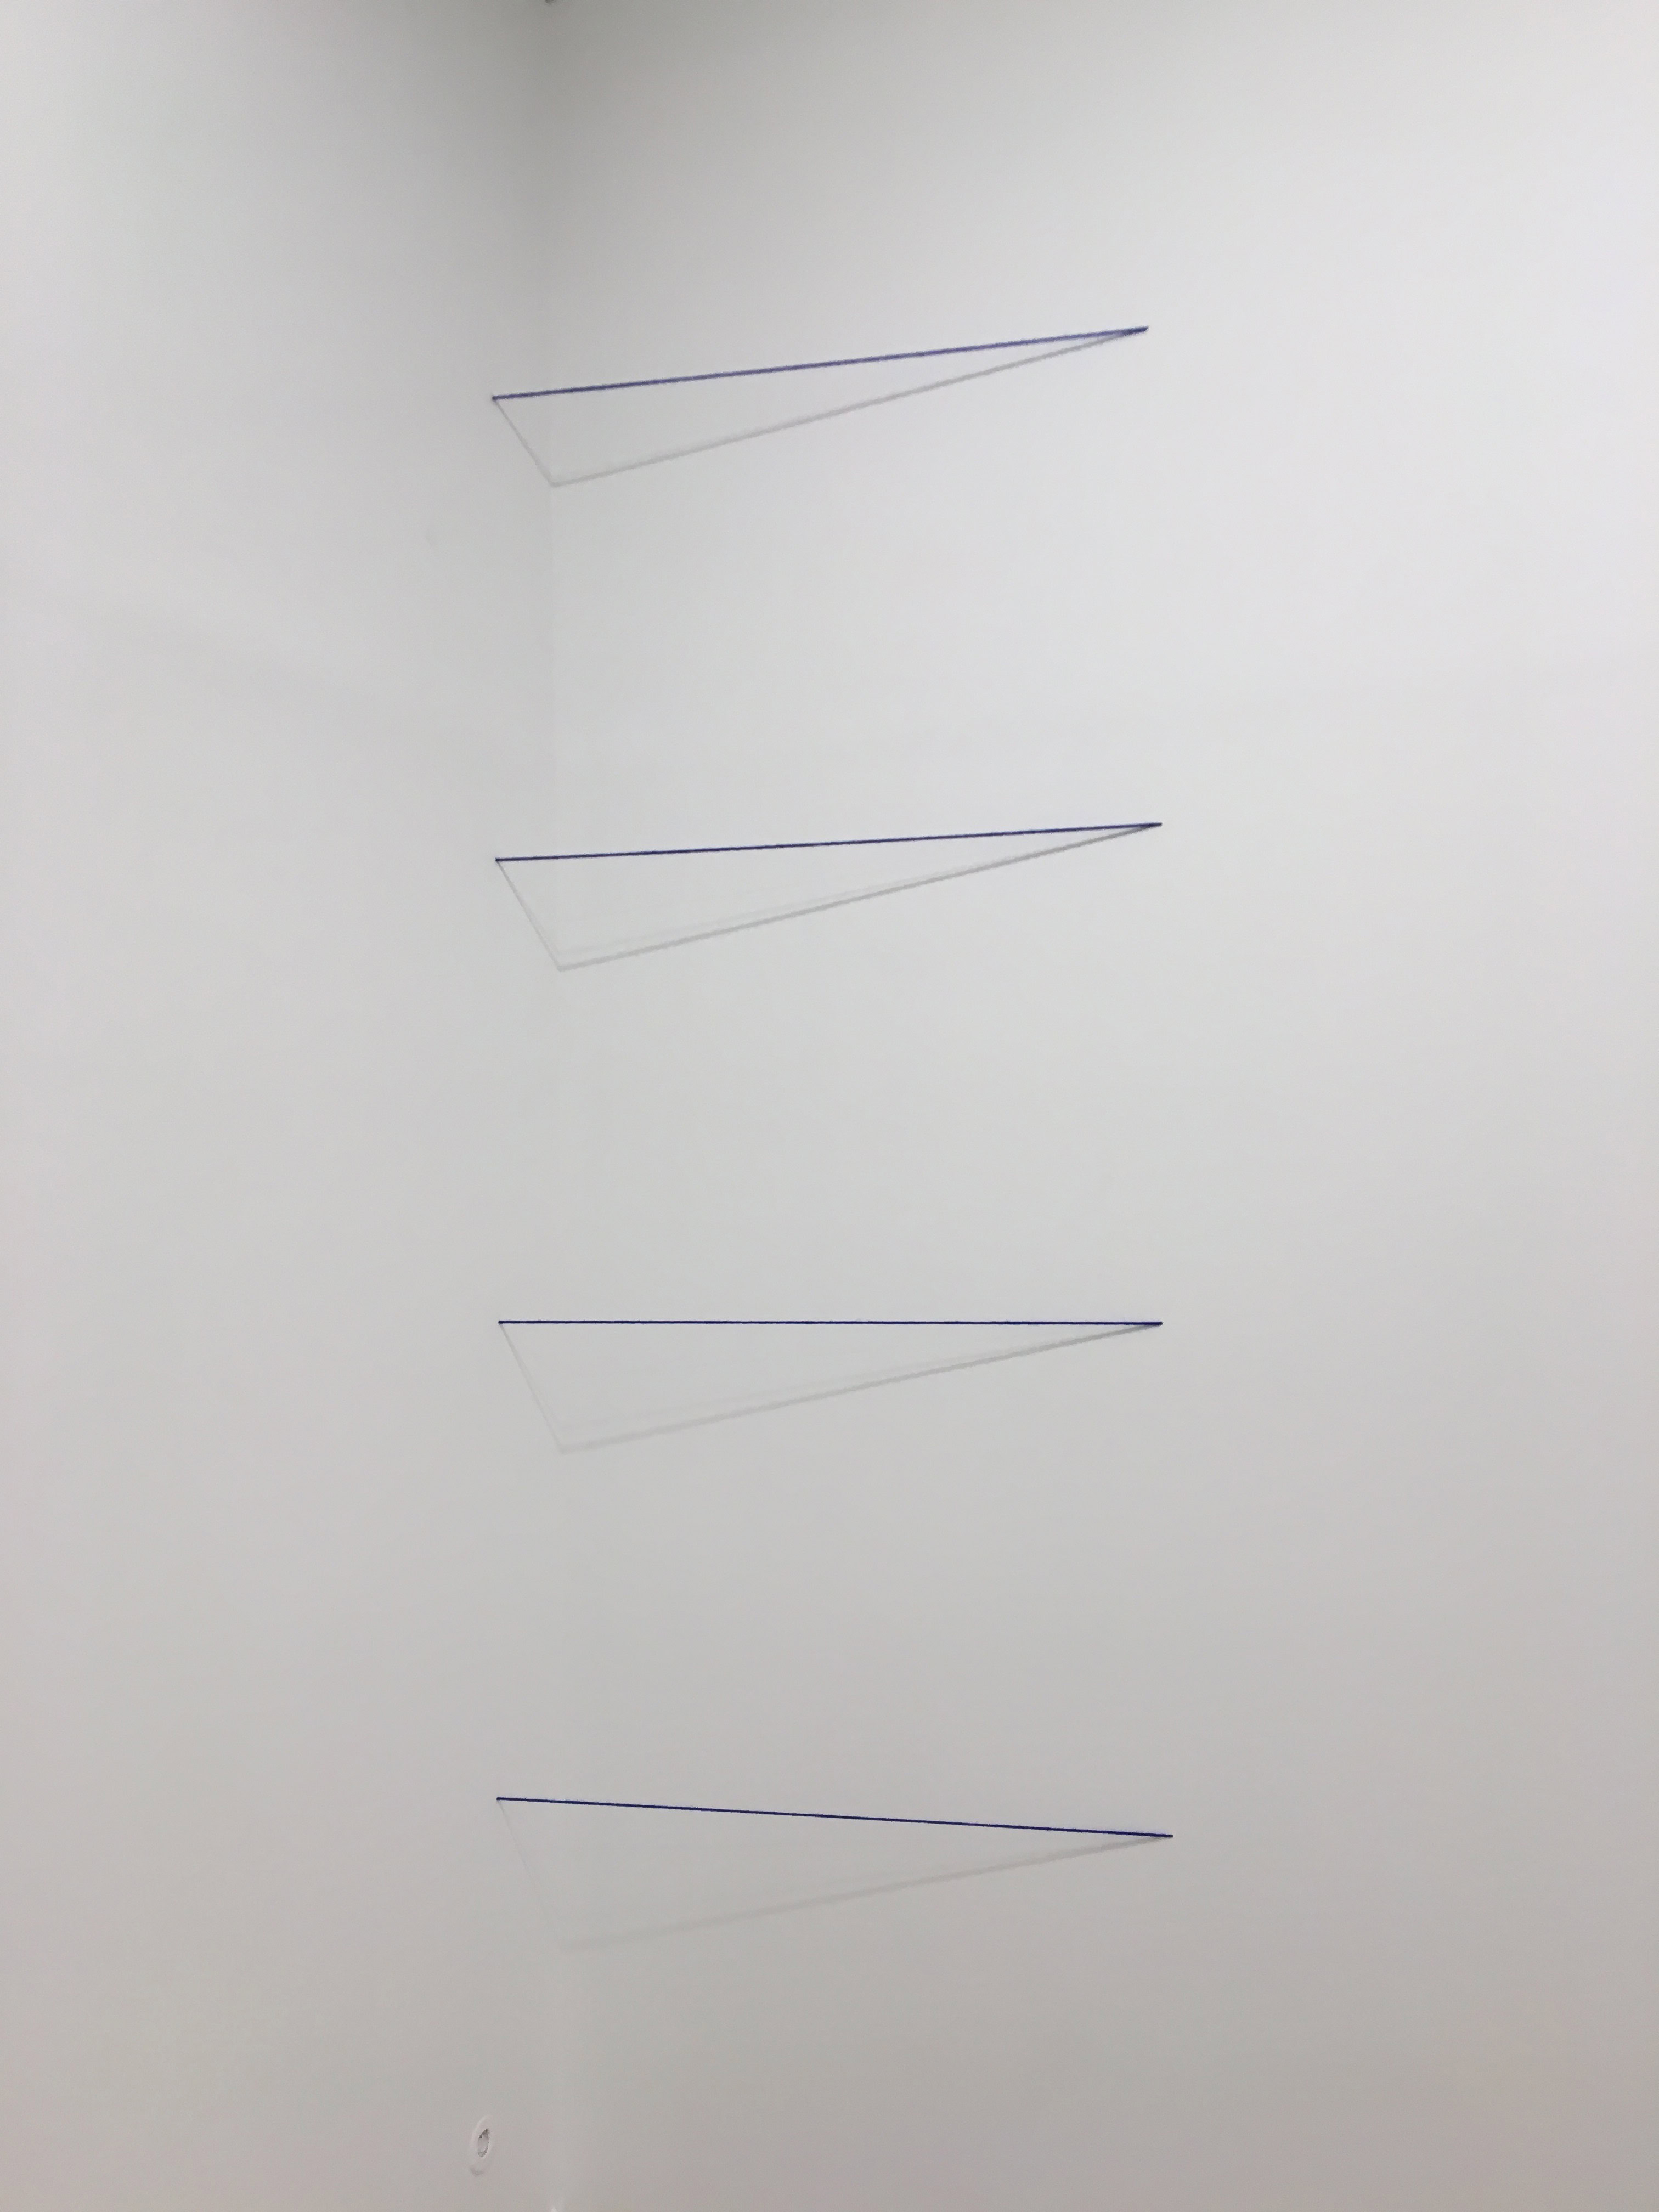 Fred Sandback, Untitled (Sculptural Study, Four-part Cornered), c. 1970-2007)